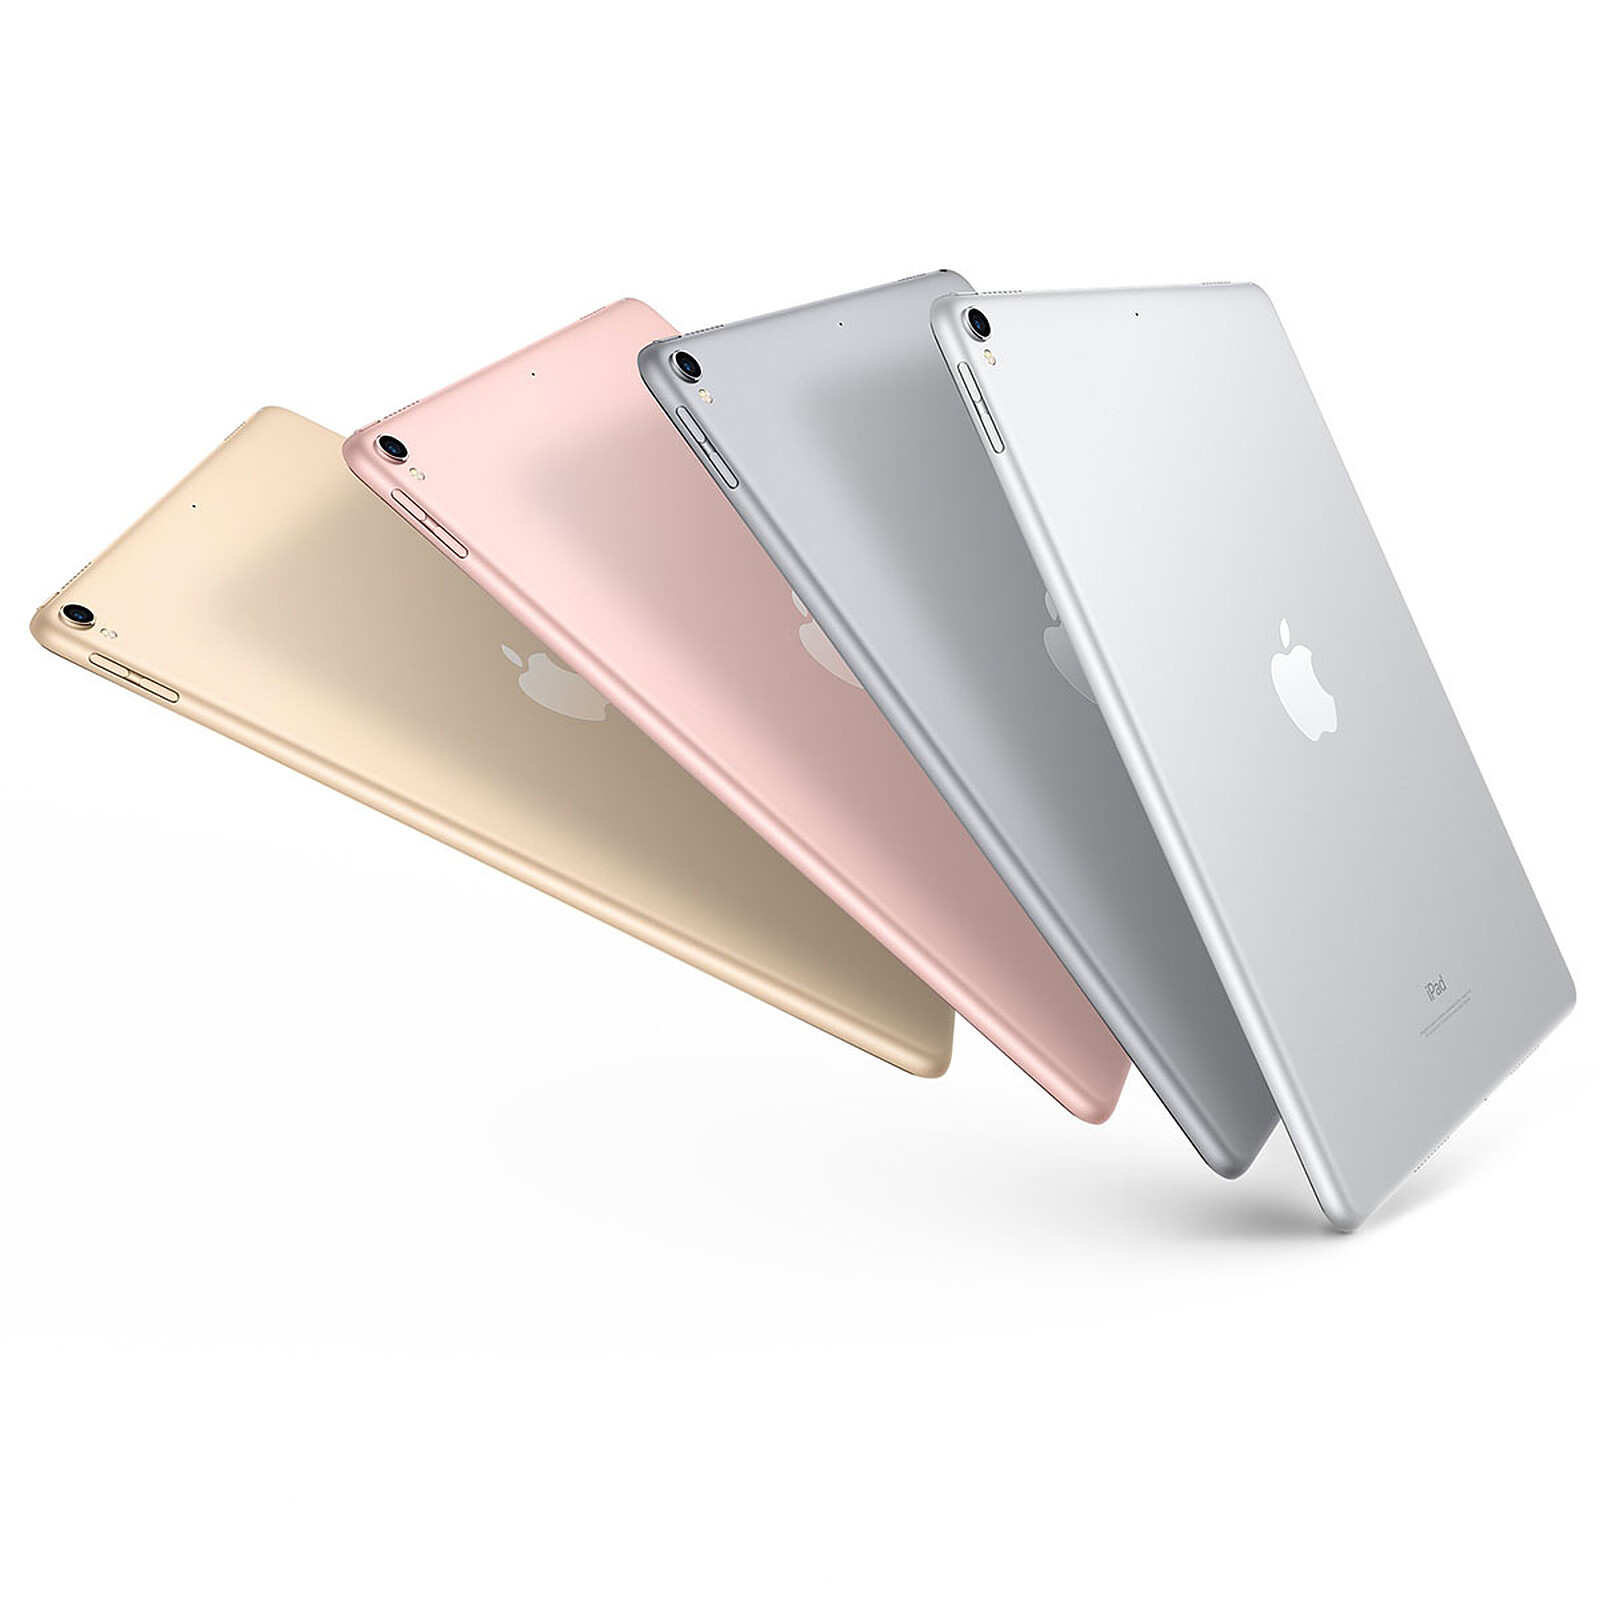 Apple iPad Pro 10.5 inch 64GB Wi-Fi Space Grey - Tablet computer